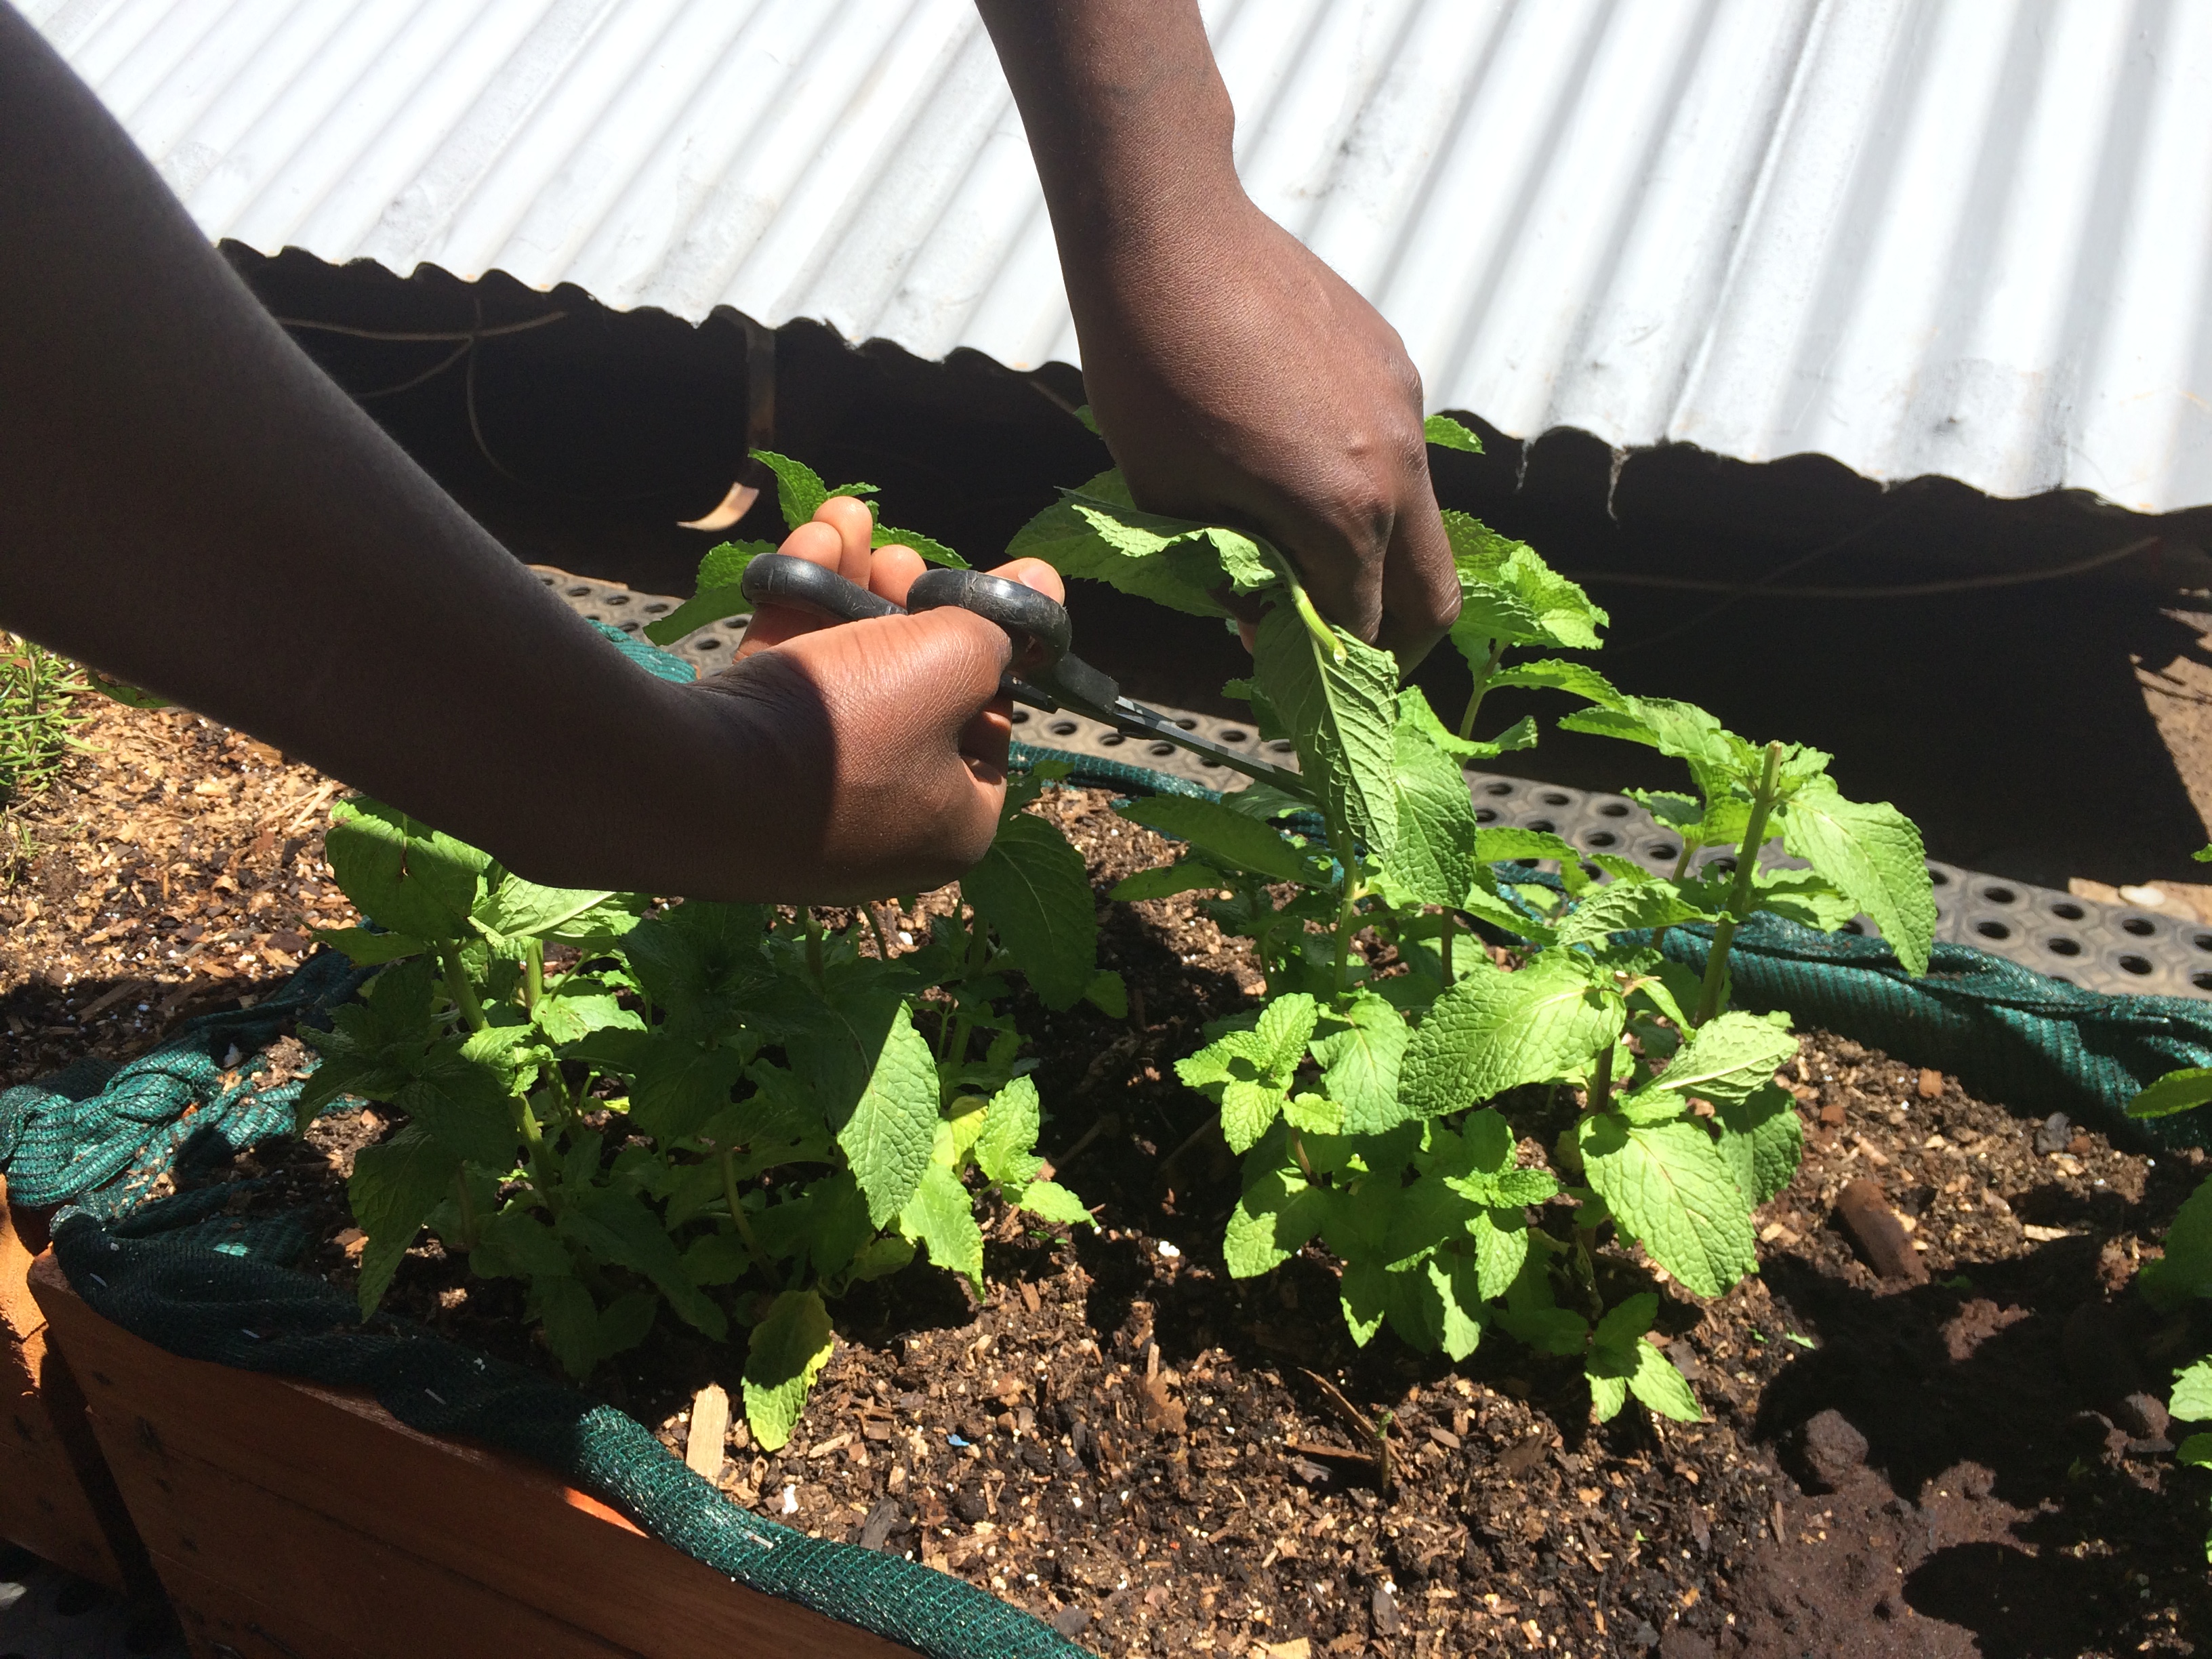 Ashleigh Machete cutting some mint from the Braamfontein rooftop garden.